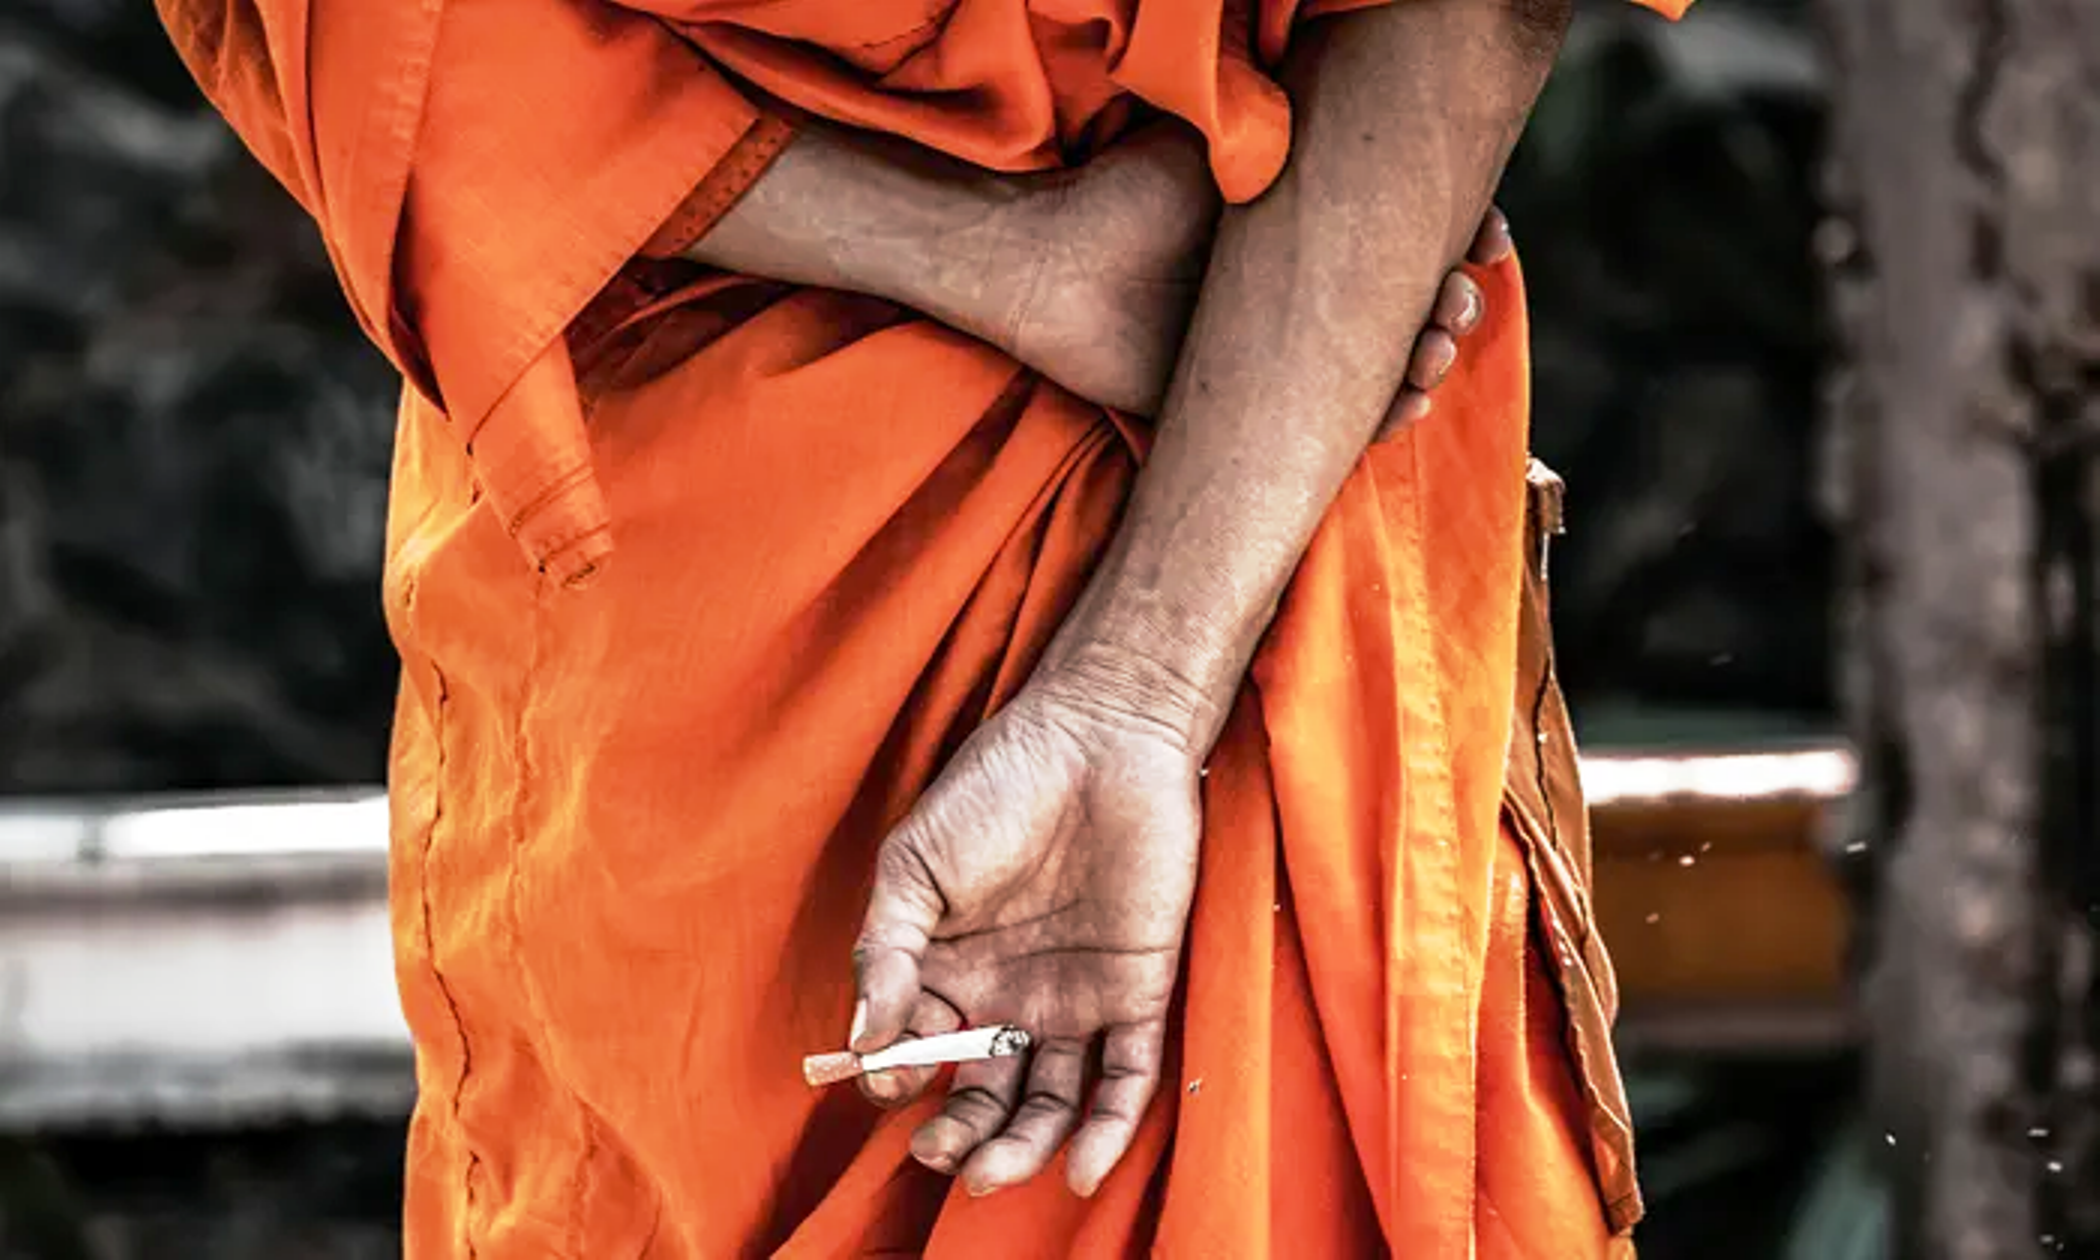 Thailandia e droga: monaci positivi al test, chiuso tempio buddista